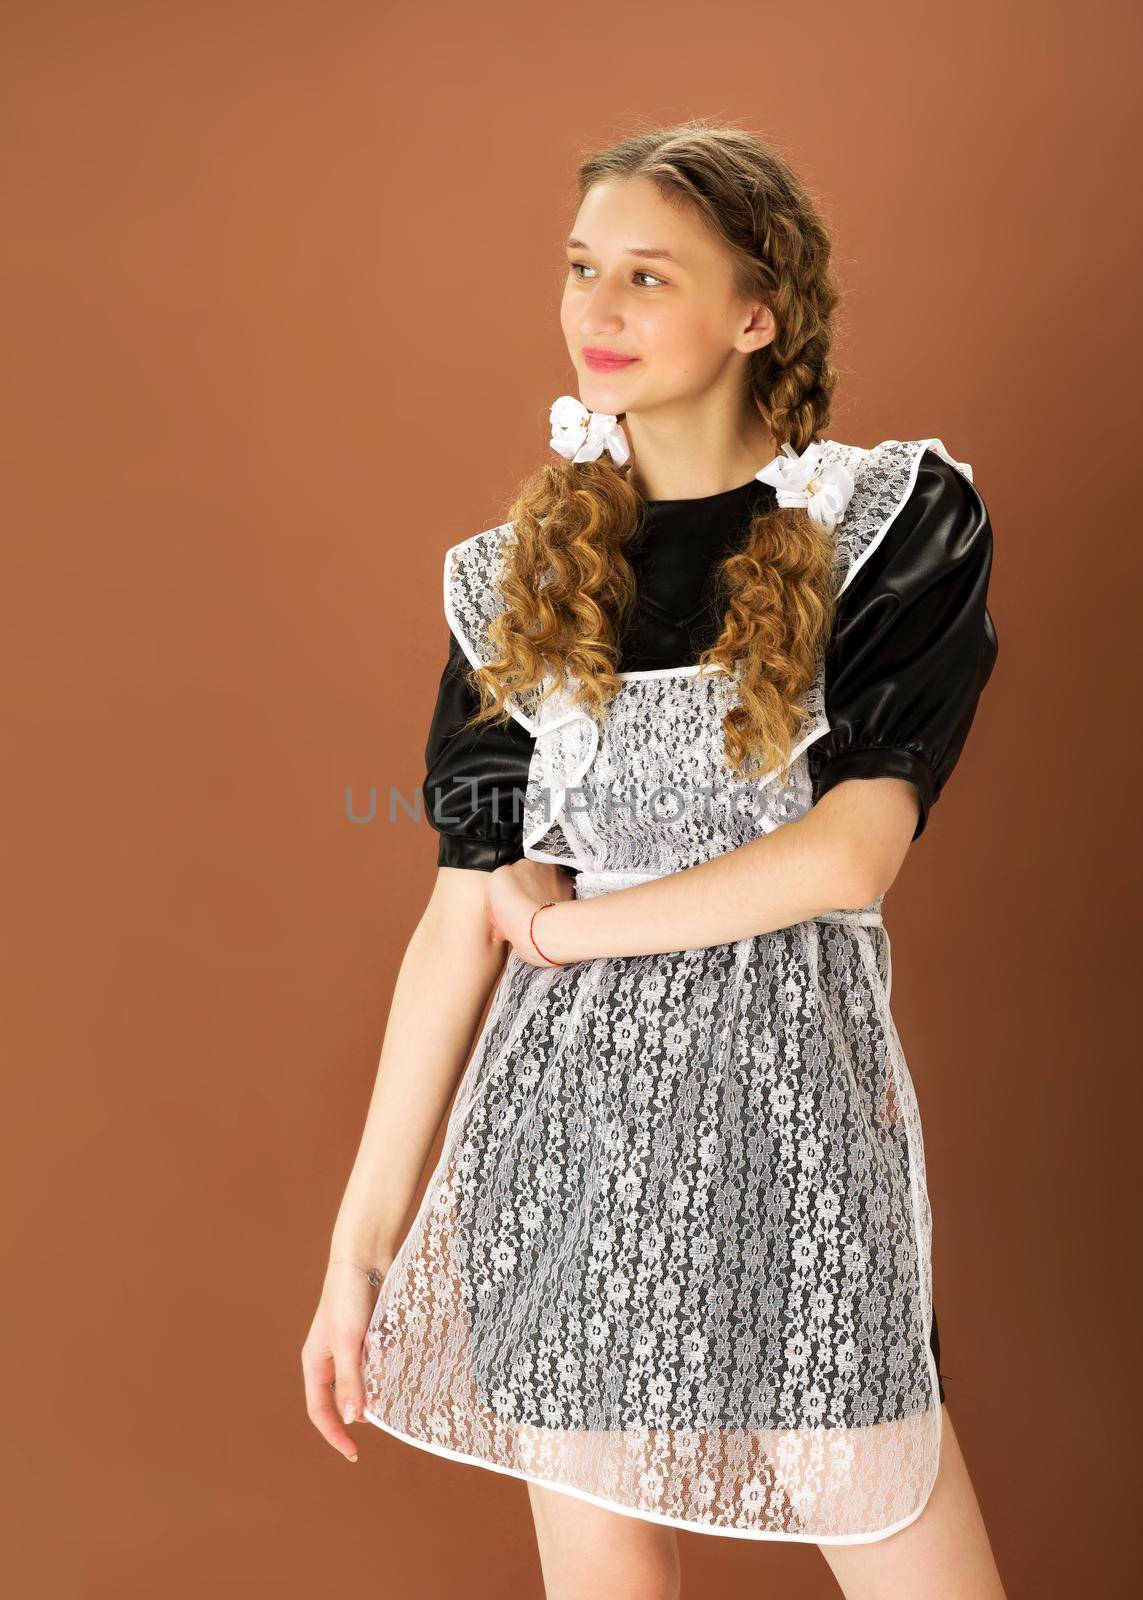 Cheerful blonde teen girl in retro school uniform by kolesnikov_studio